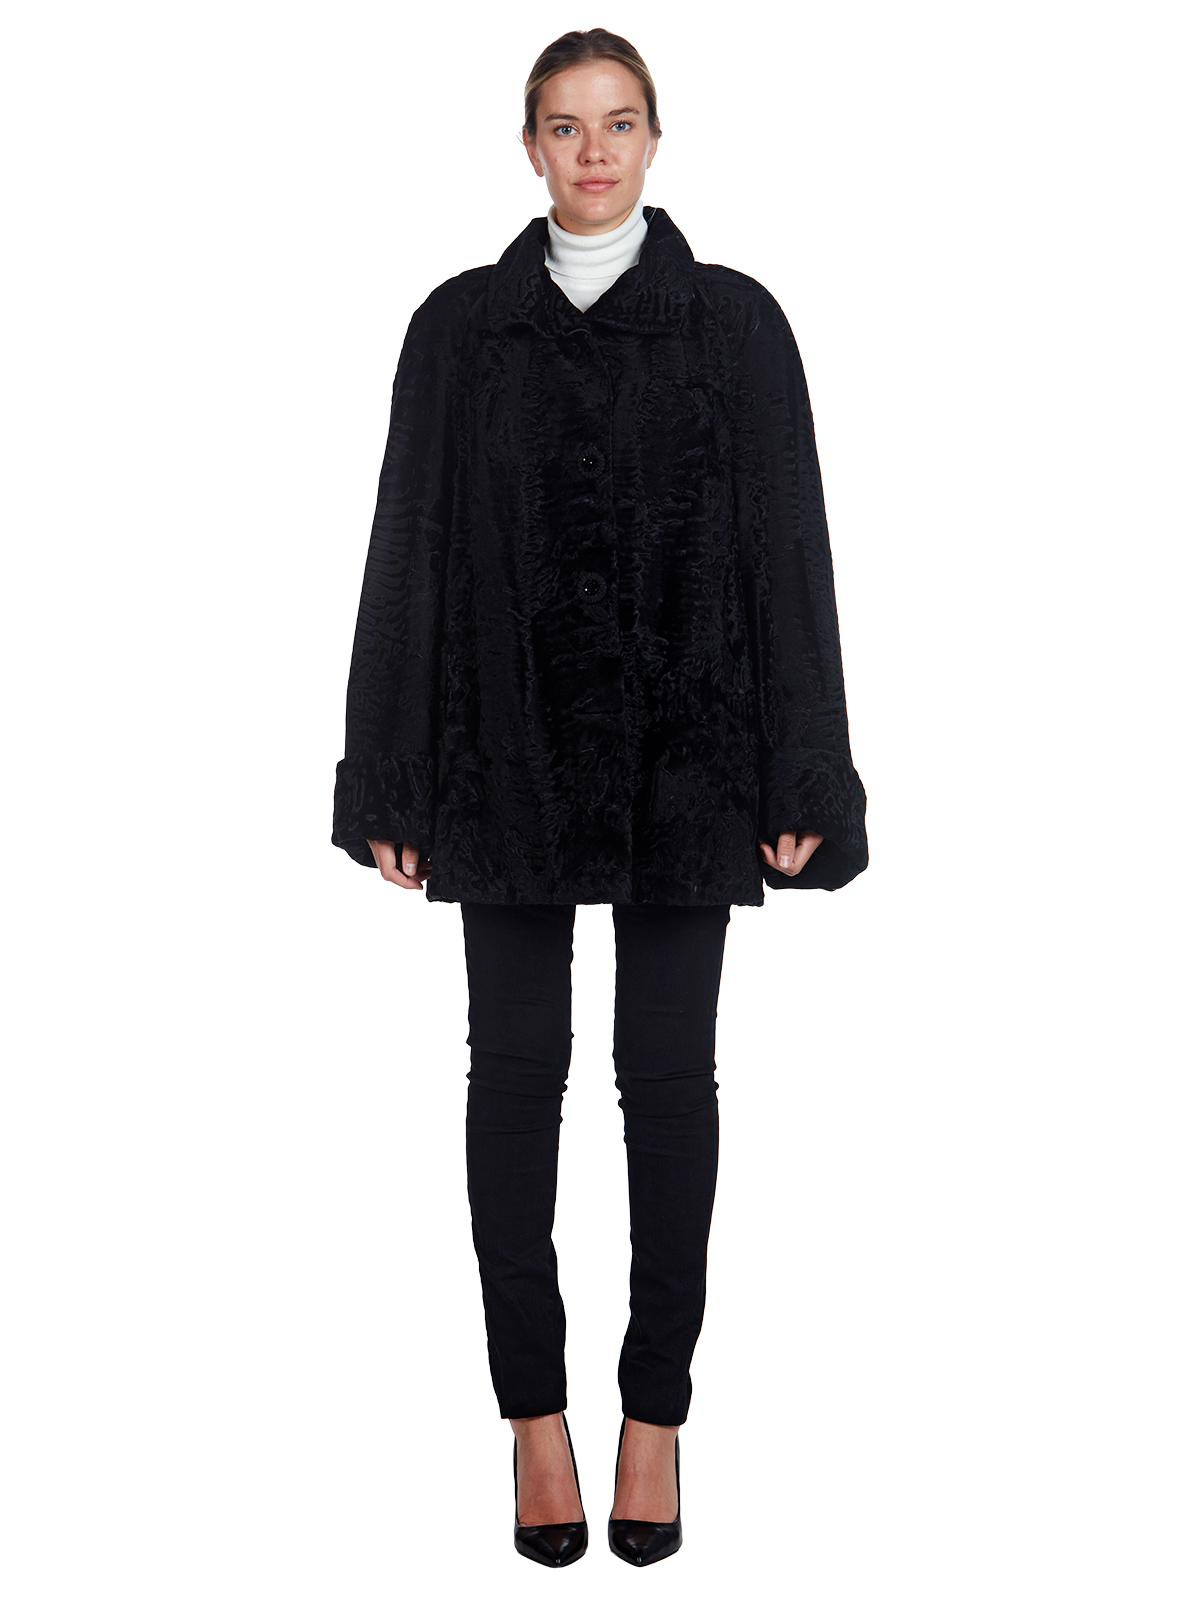 Revillon Black Broadtail Lamb Jacket - Women's Fur Jacket - Medium ...